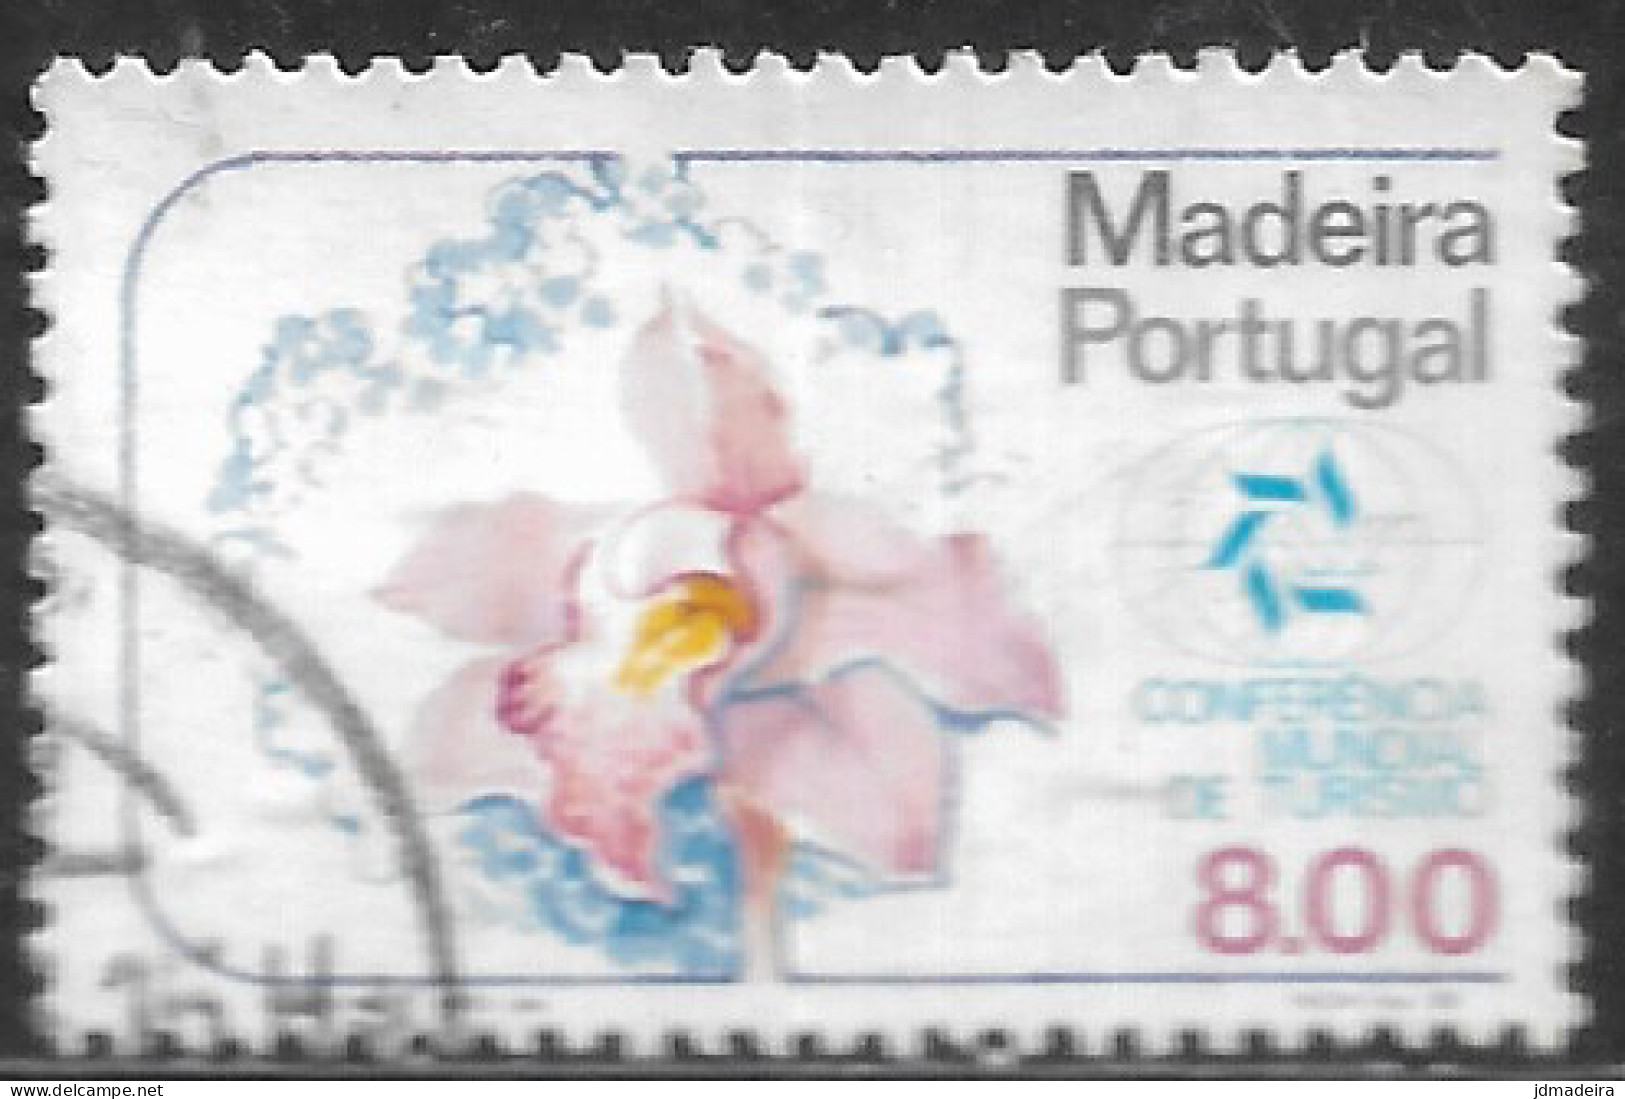 Portugal – 1980 Madeira Tourism 8.00 Used Stamp - Oblitérés